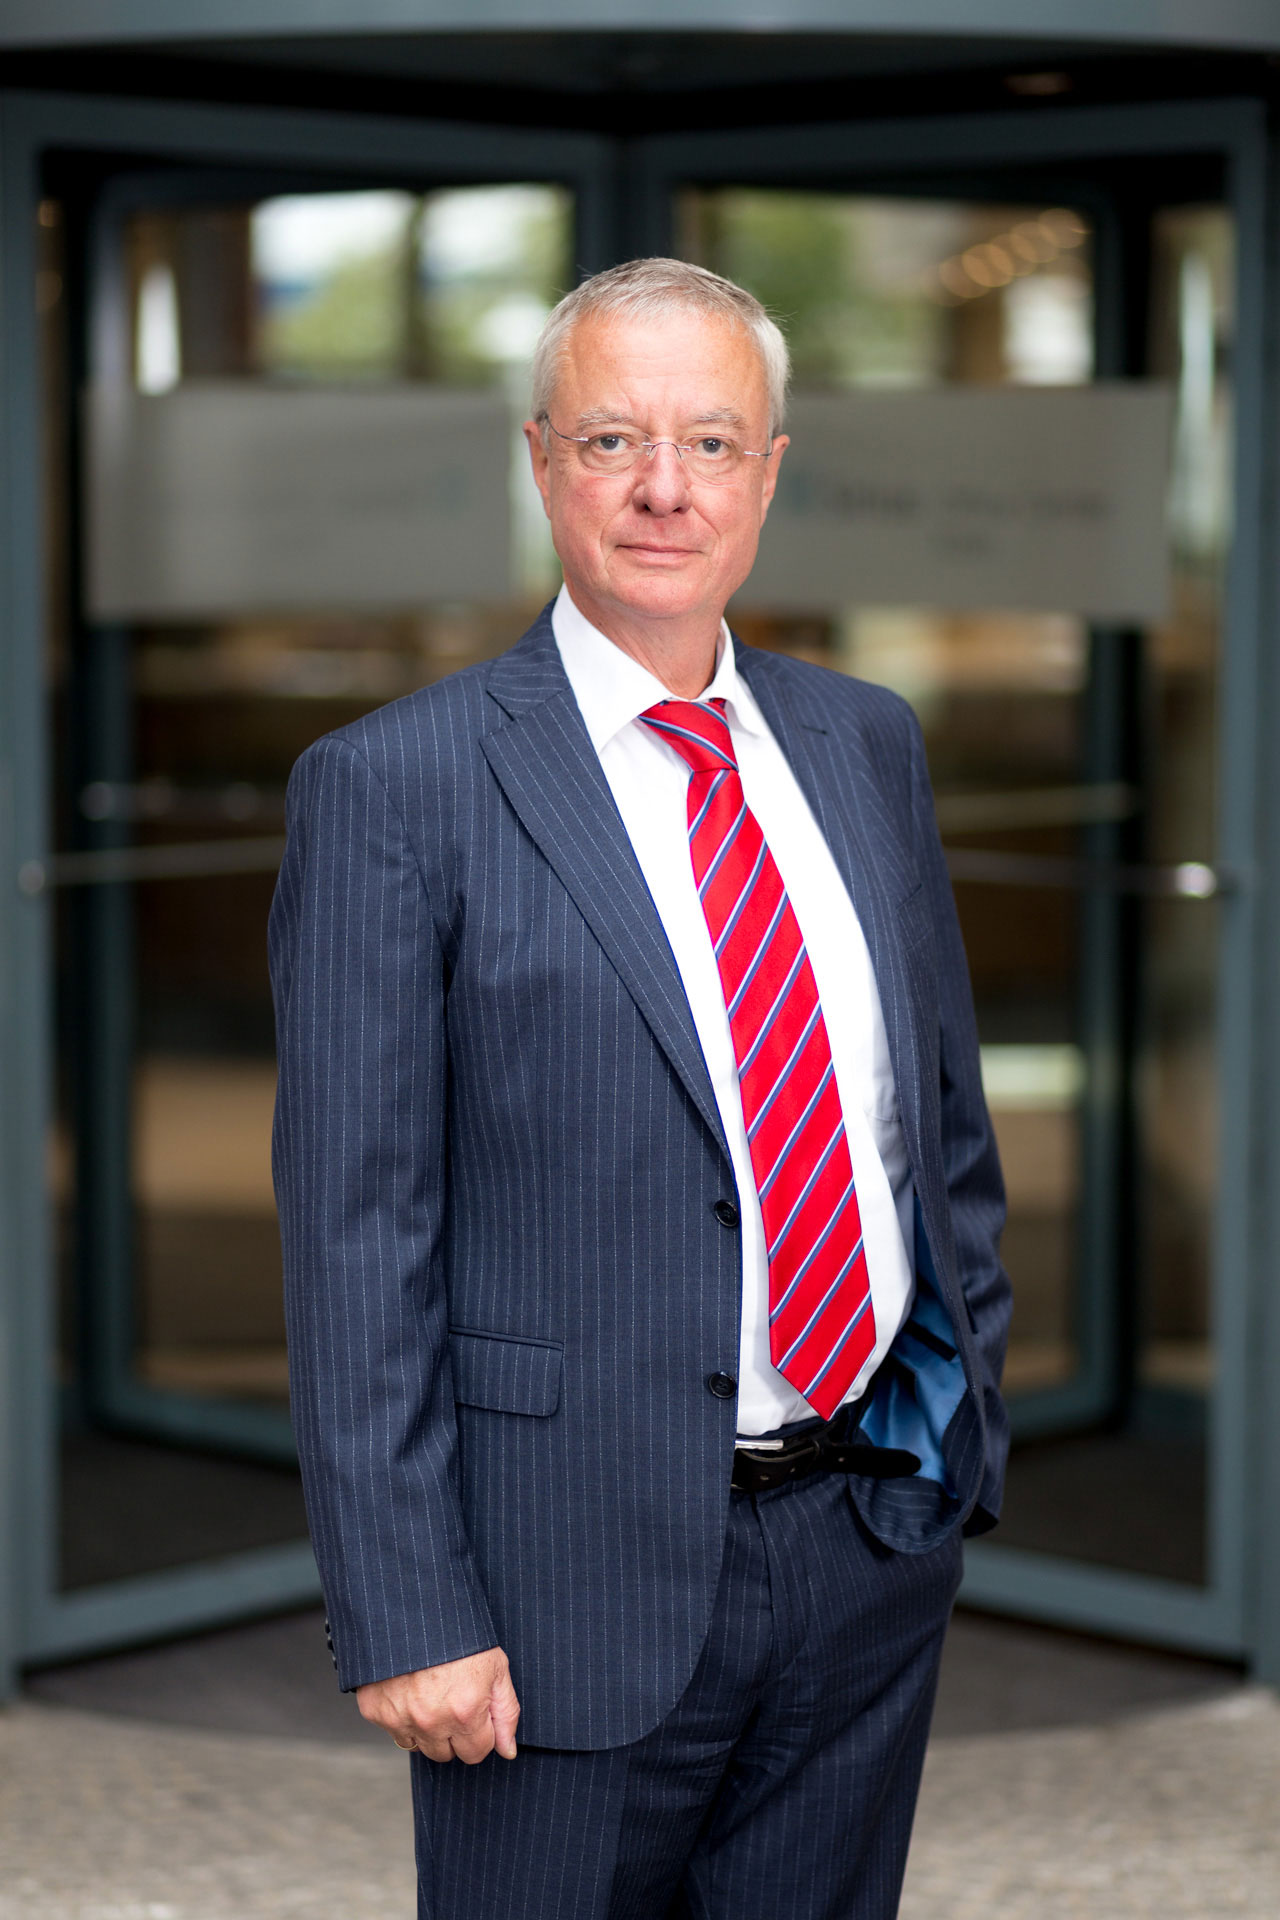 Andreas Lücke – General Director, Association of the German Heating Industry (BDH)